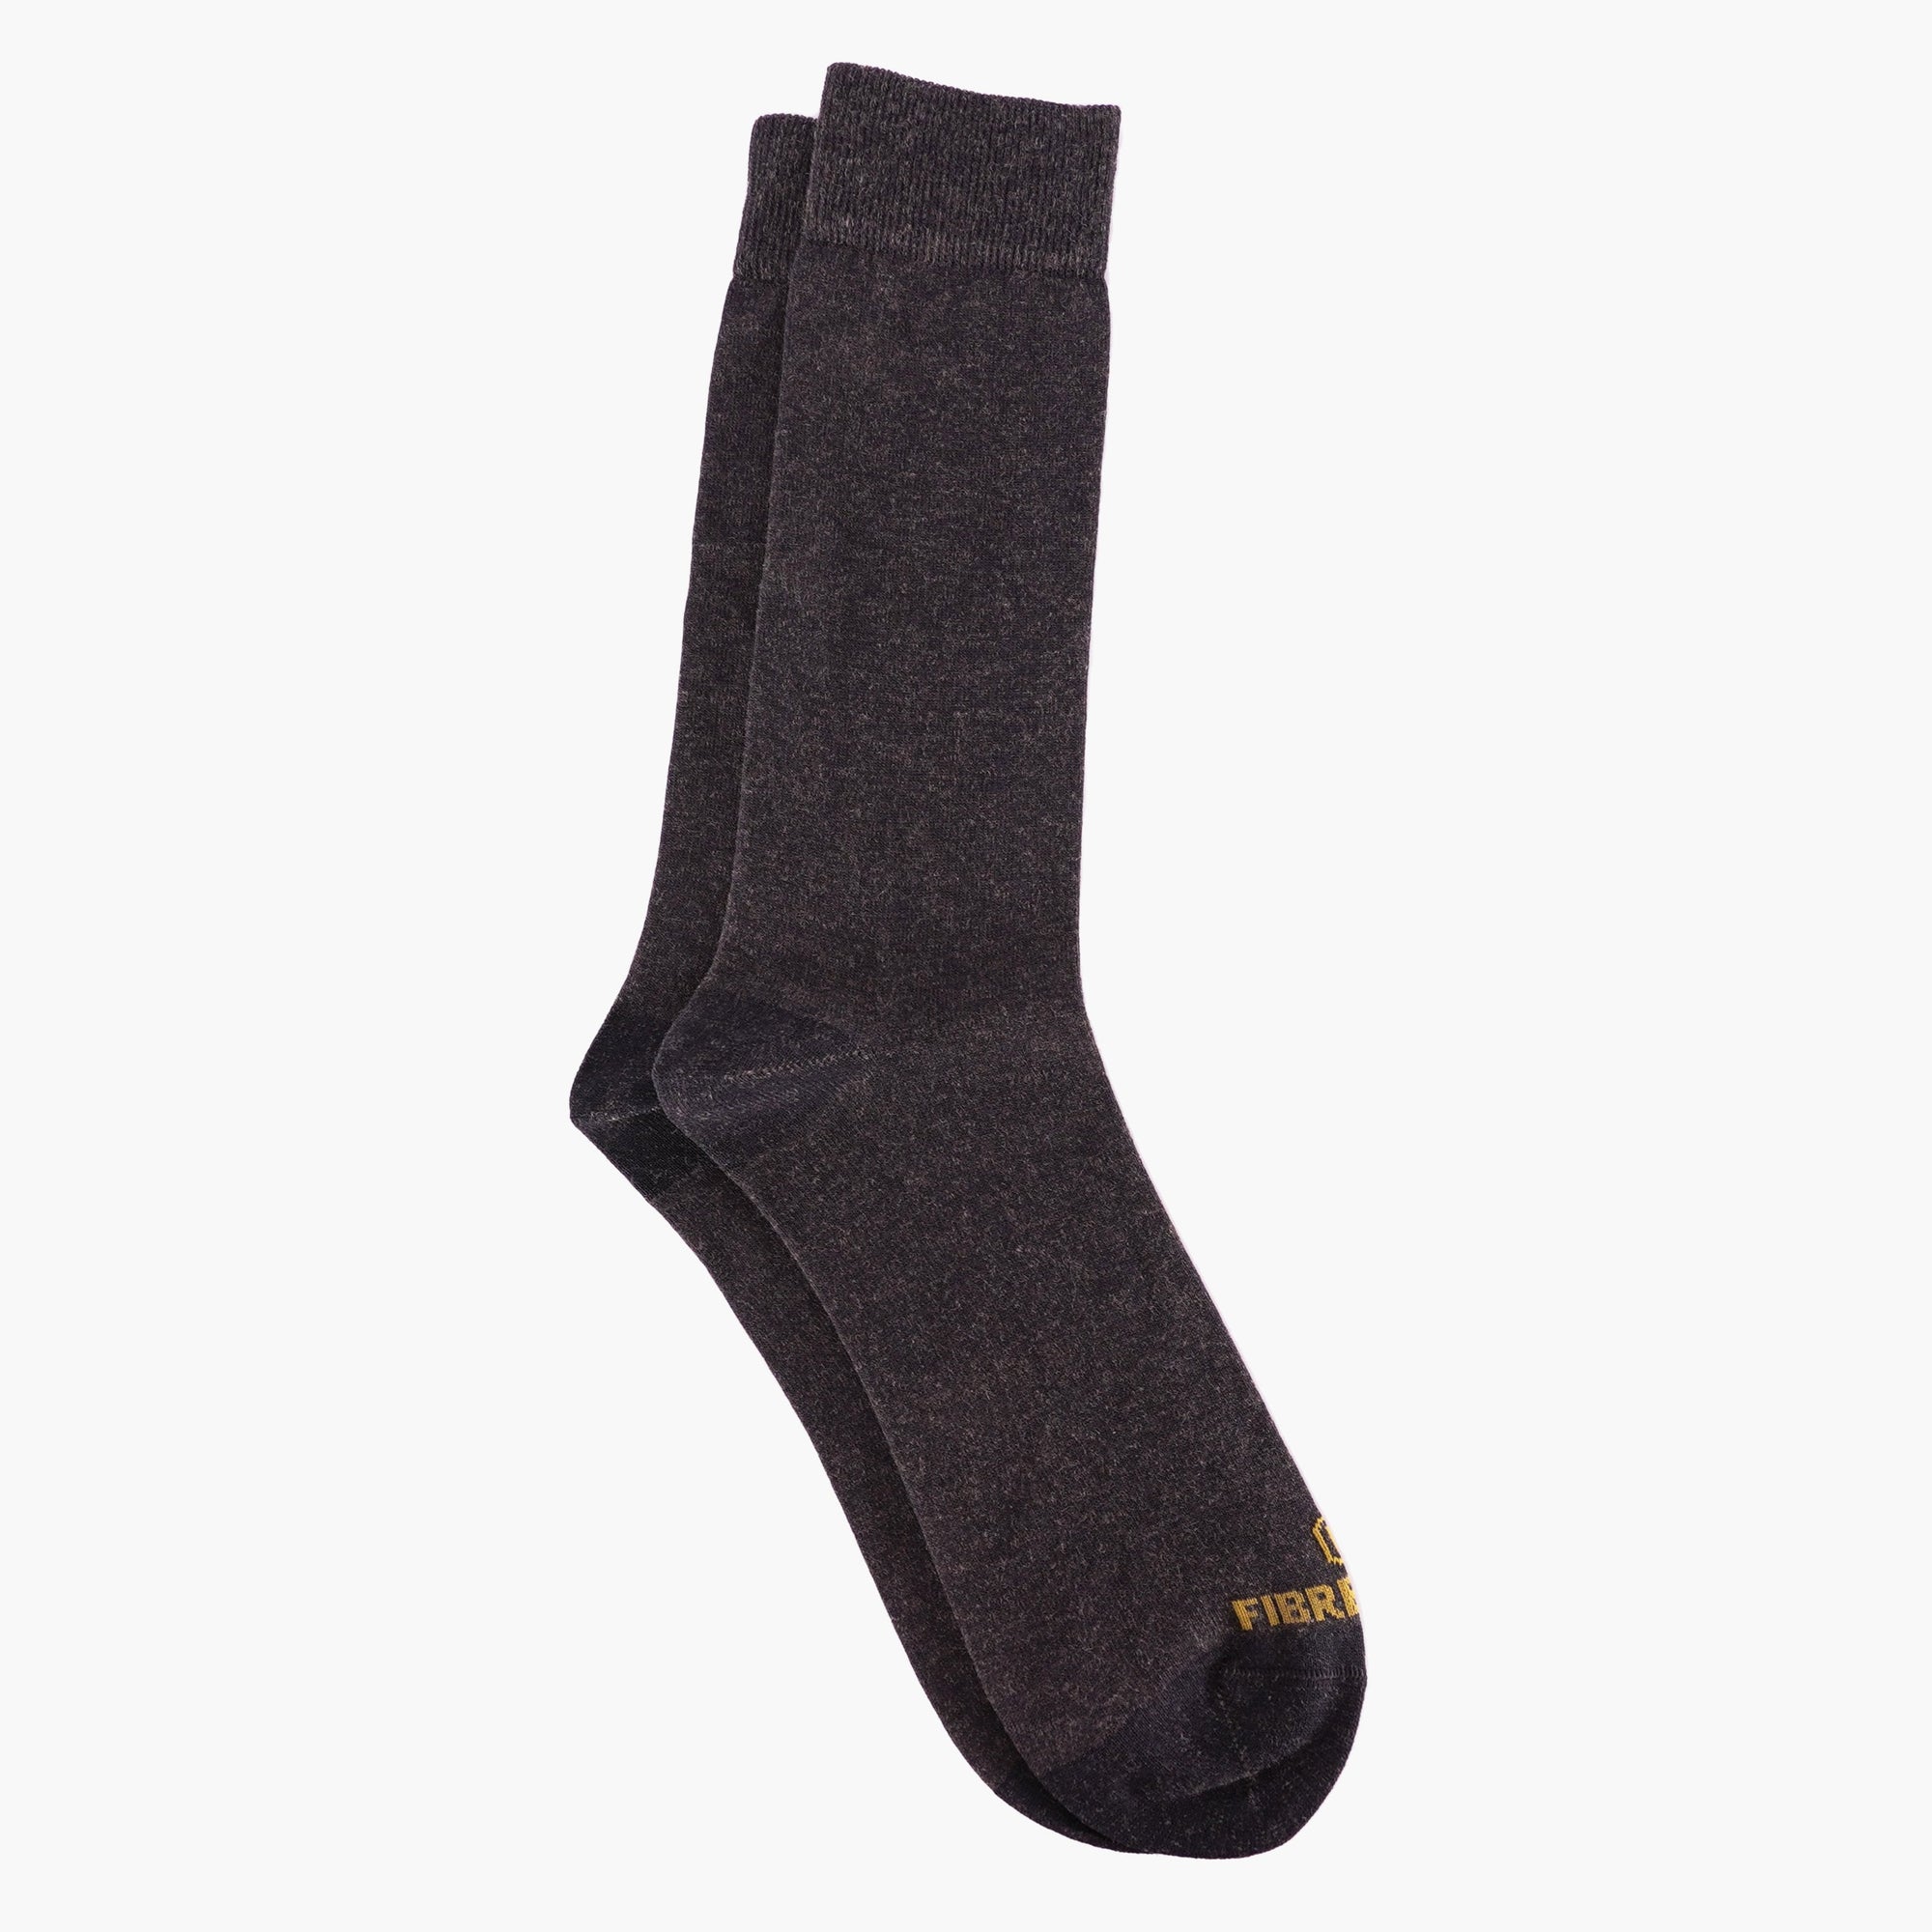 Thermal Socks for Raynaud's Disease